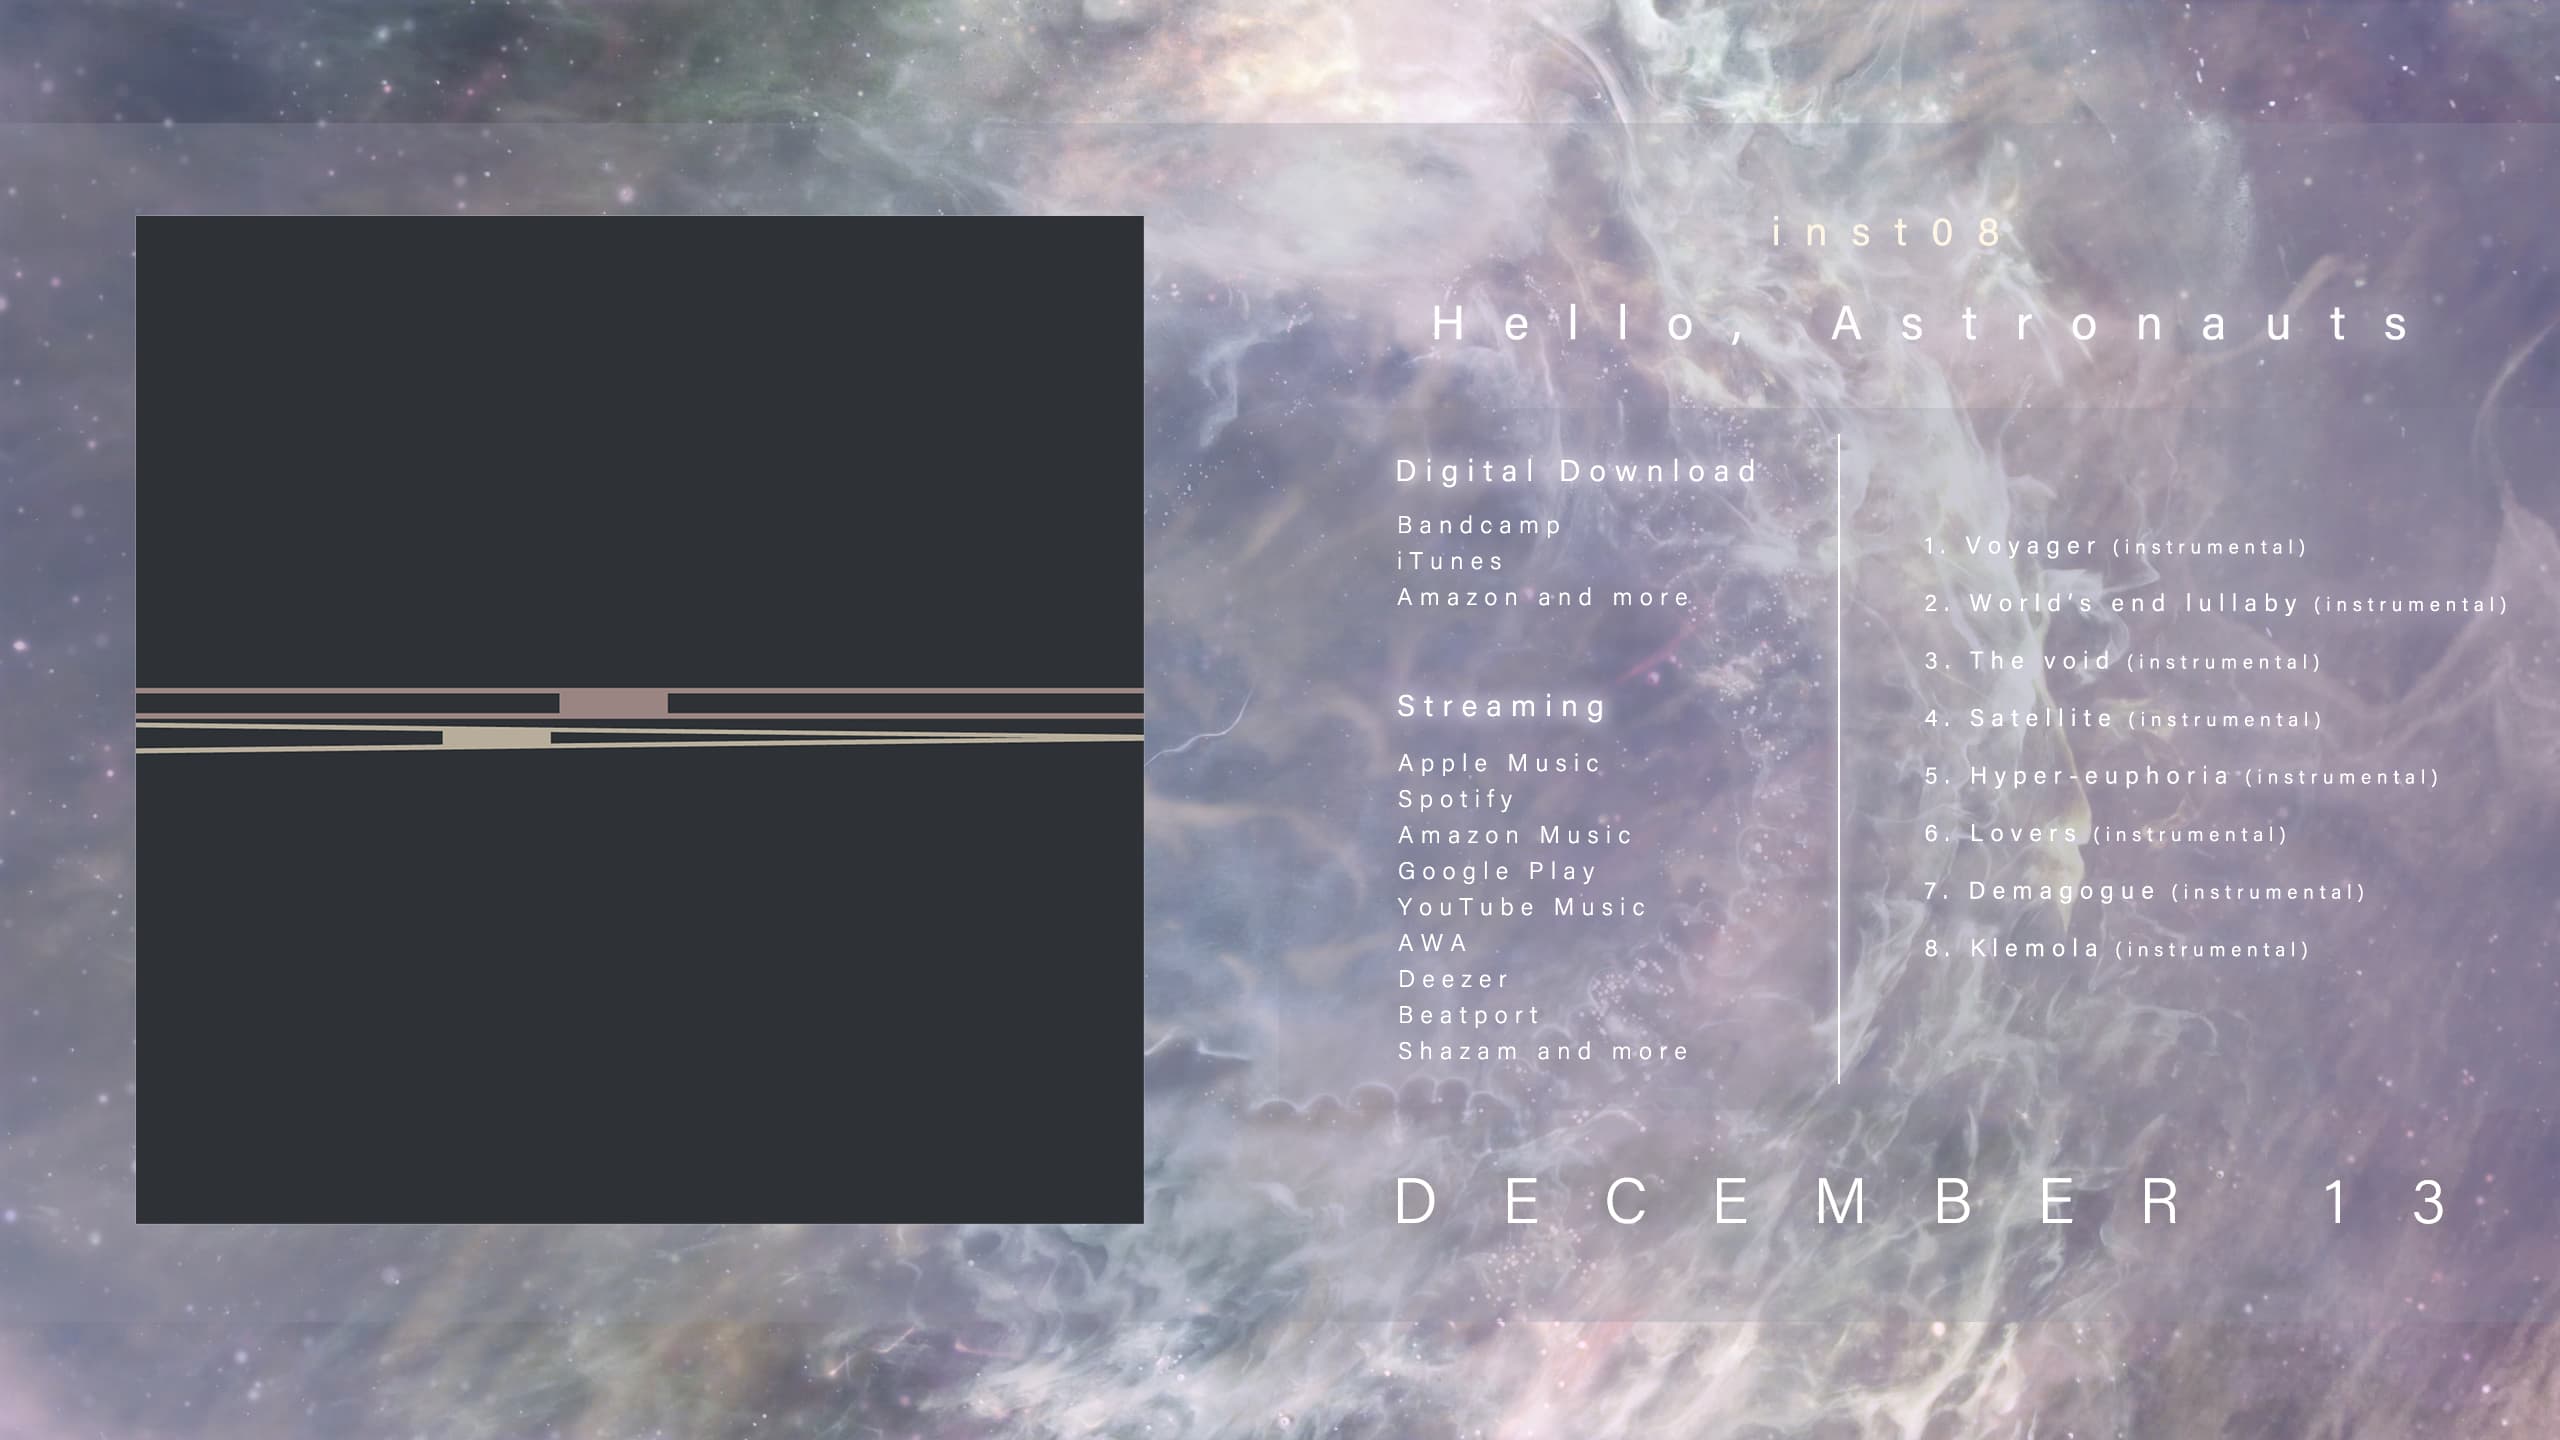 Chouchou new album “theme03 Hello, Astronauts” out Dec 13